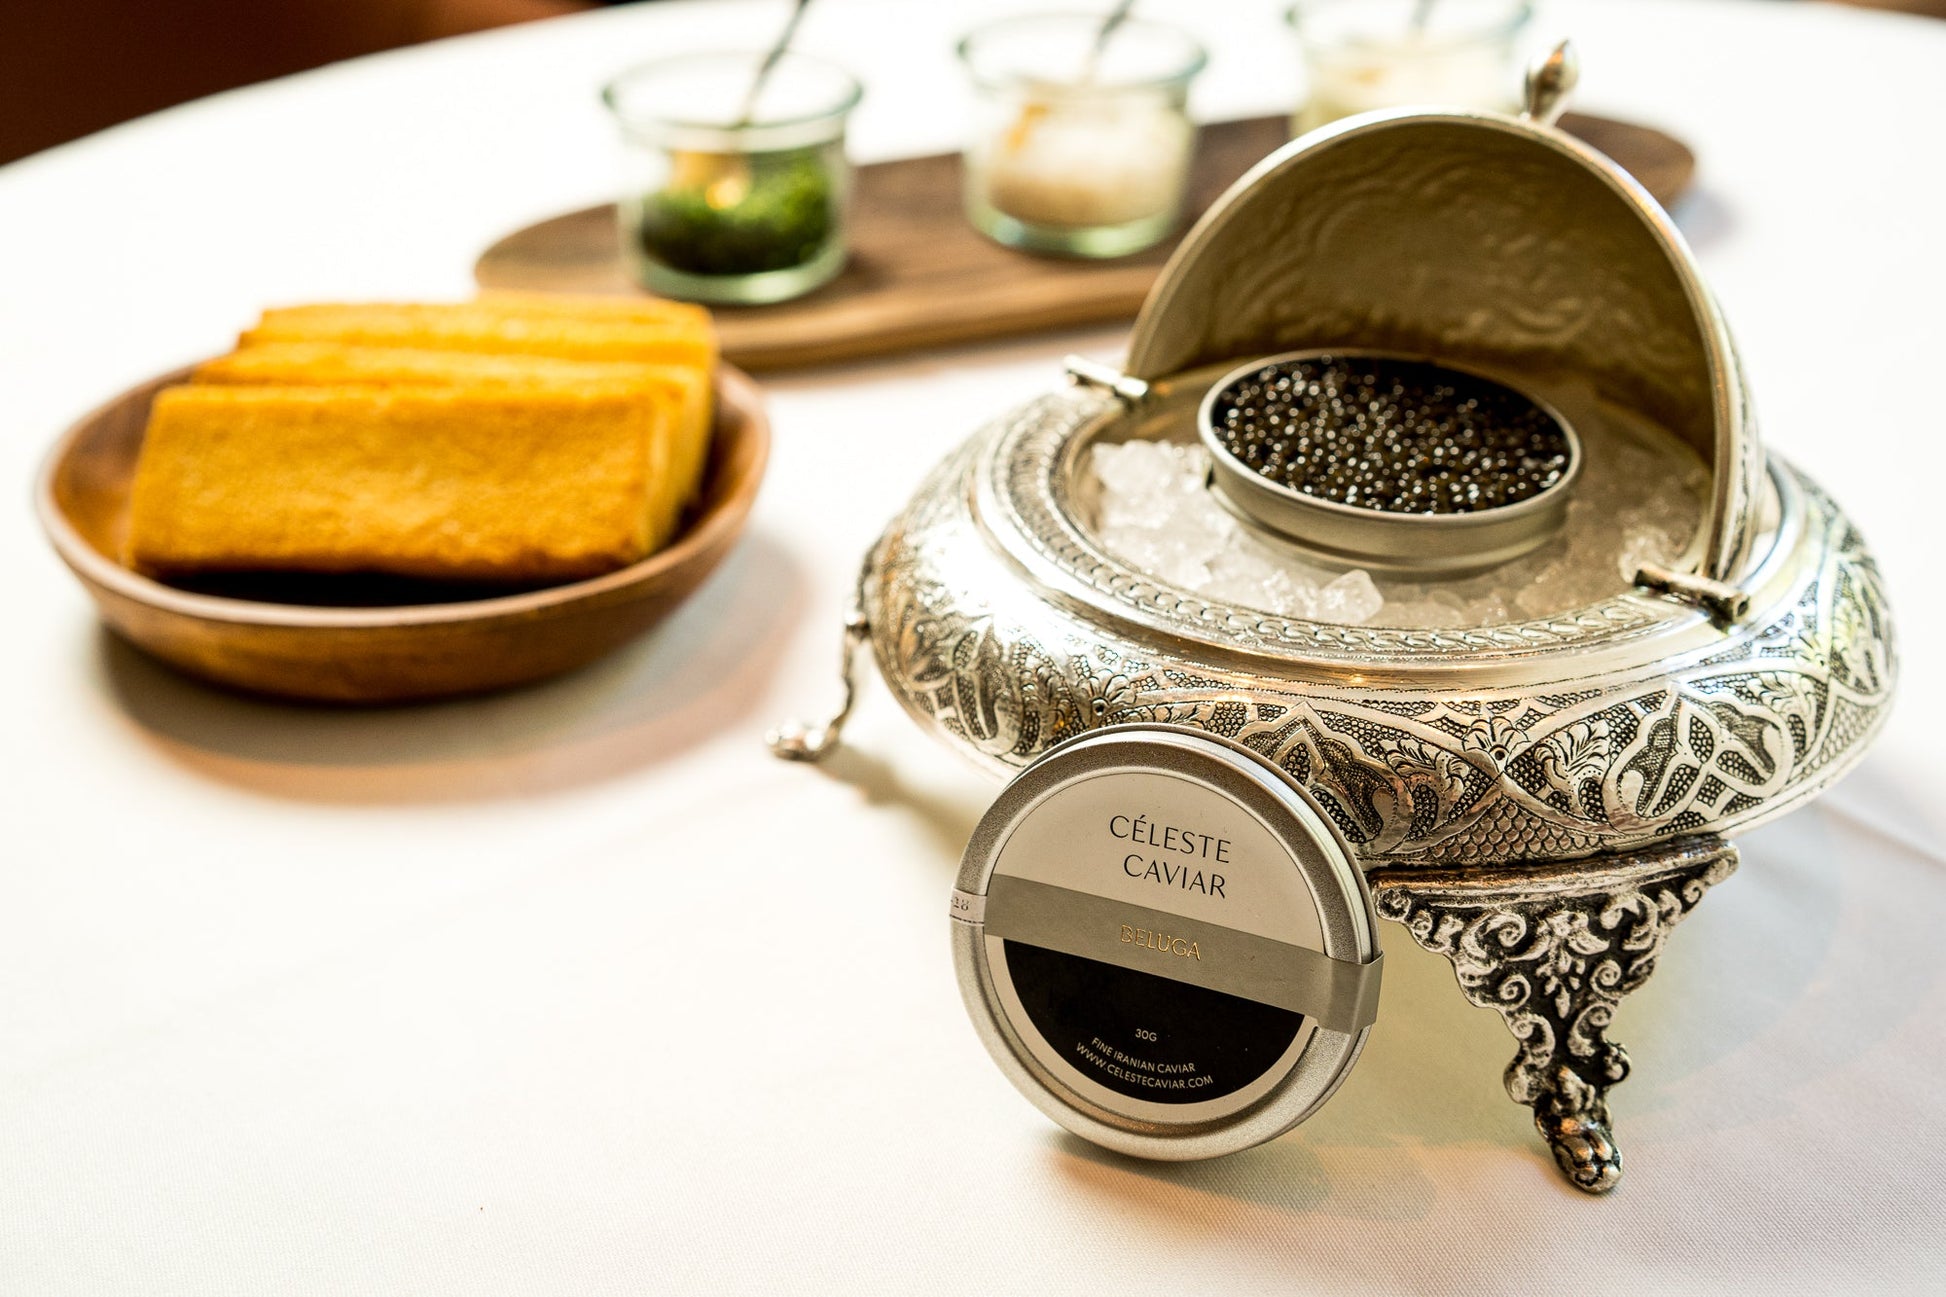 Beluga 000 Caviar, 30g